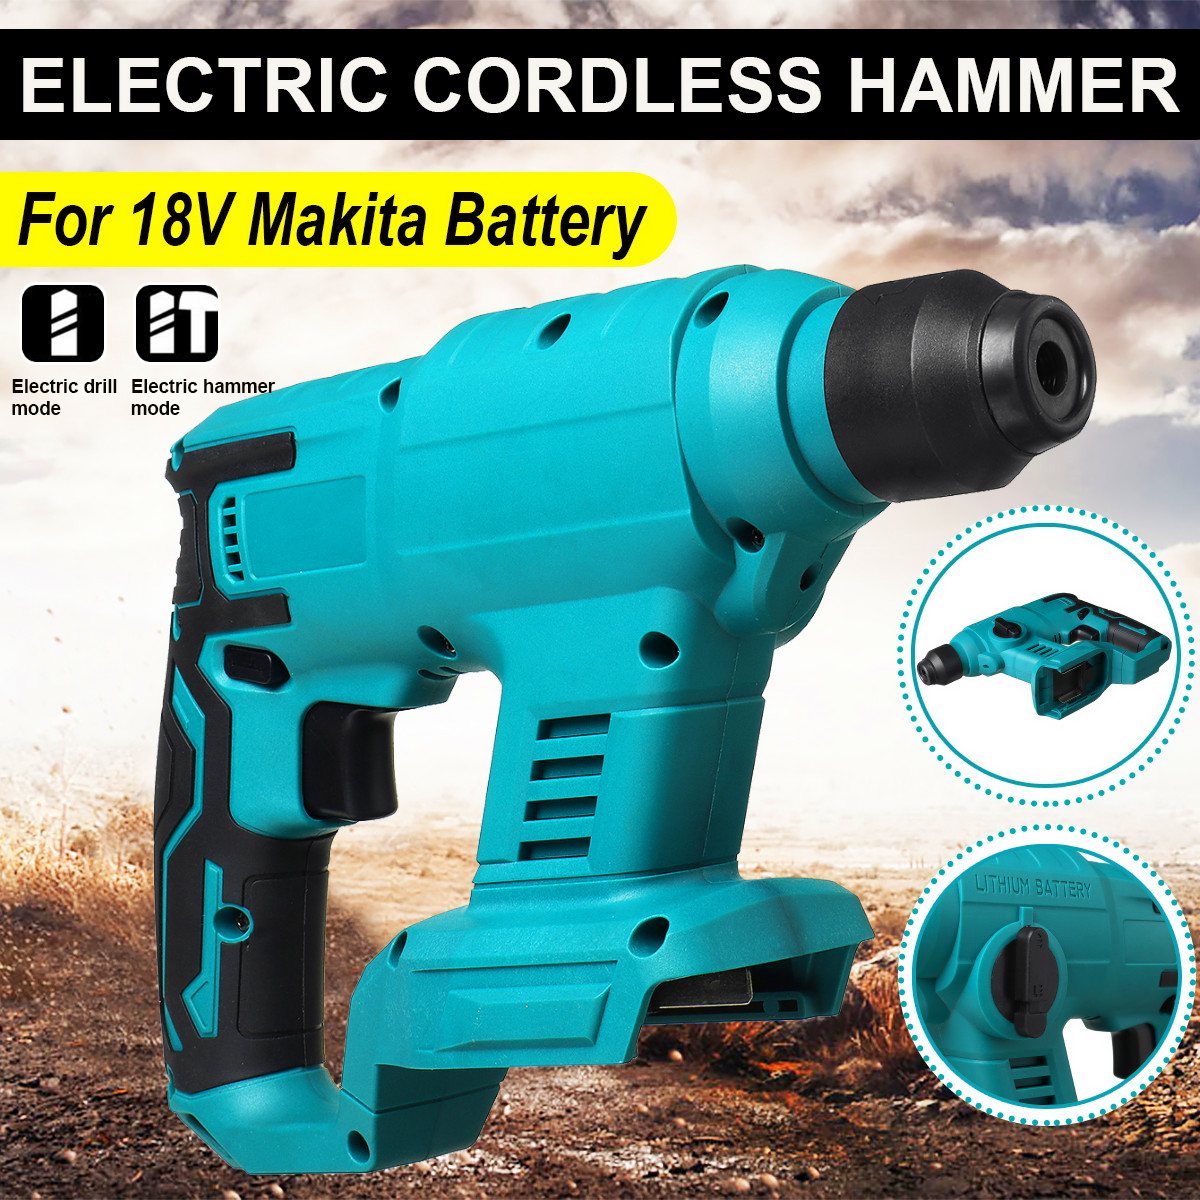 Cordless-Electric-Hammer-Drill-Granite-Brick-Wall-Hammer-For-Makita-18V-Battery-1783168-2